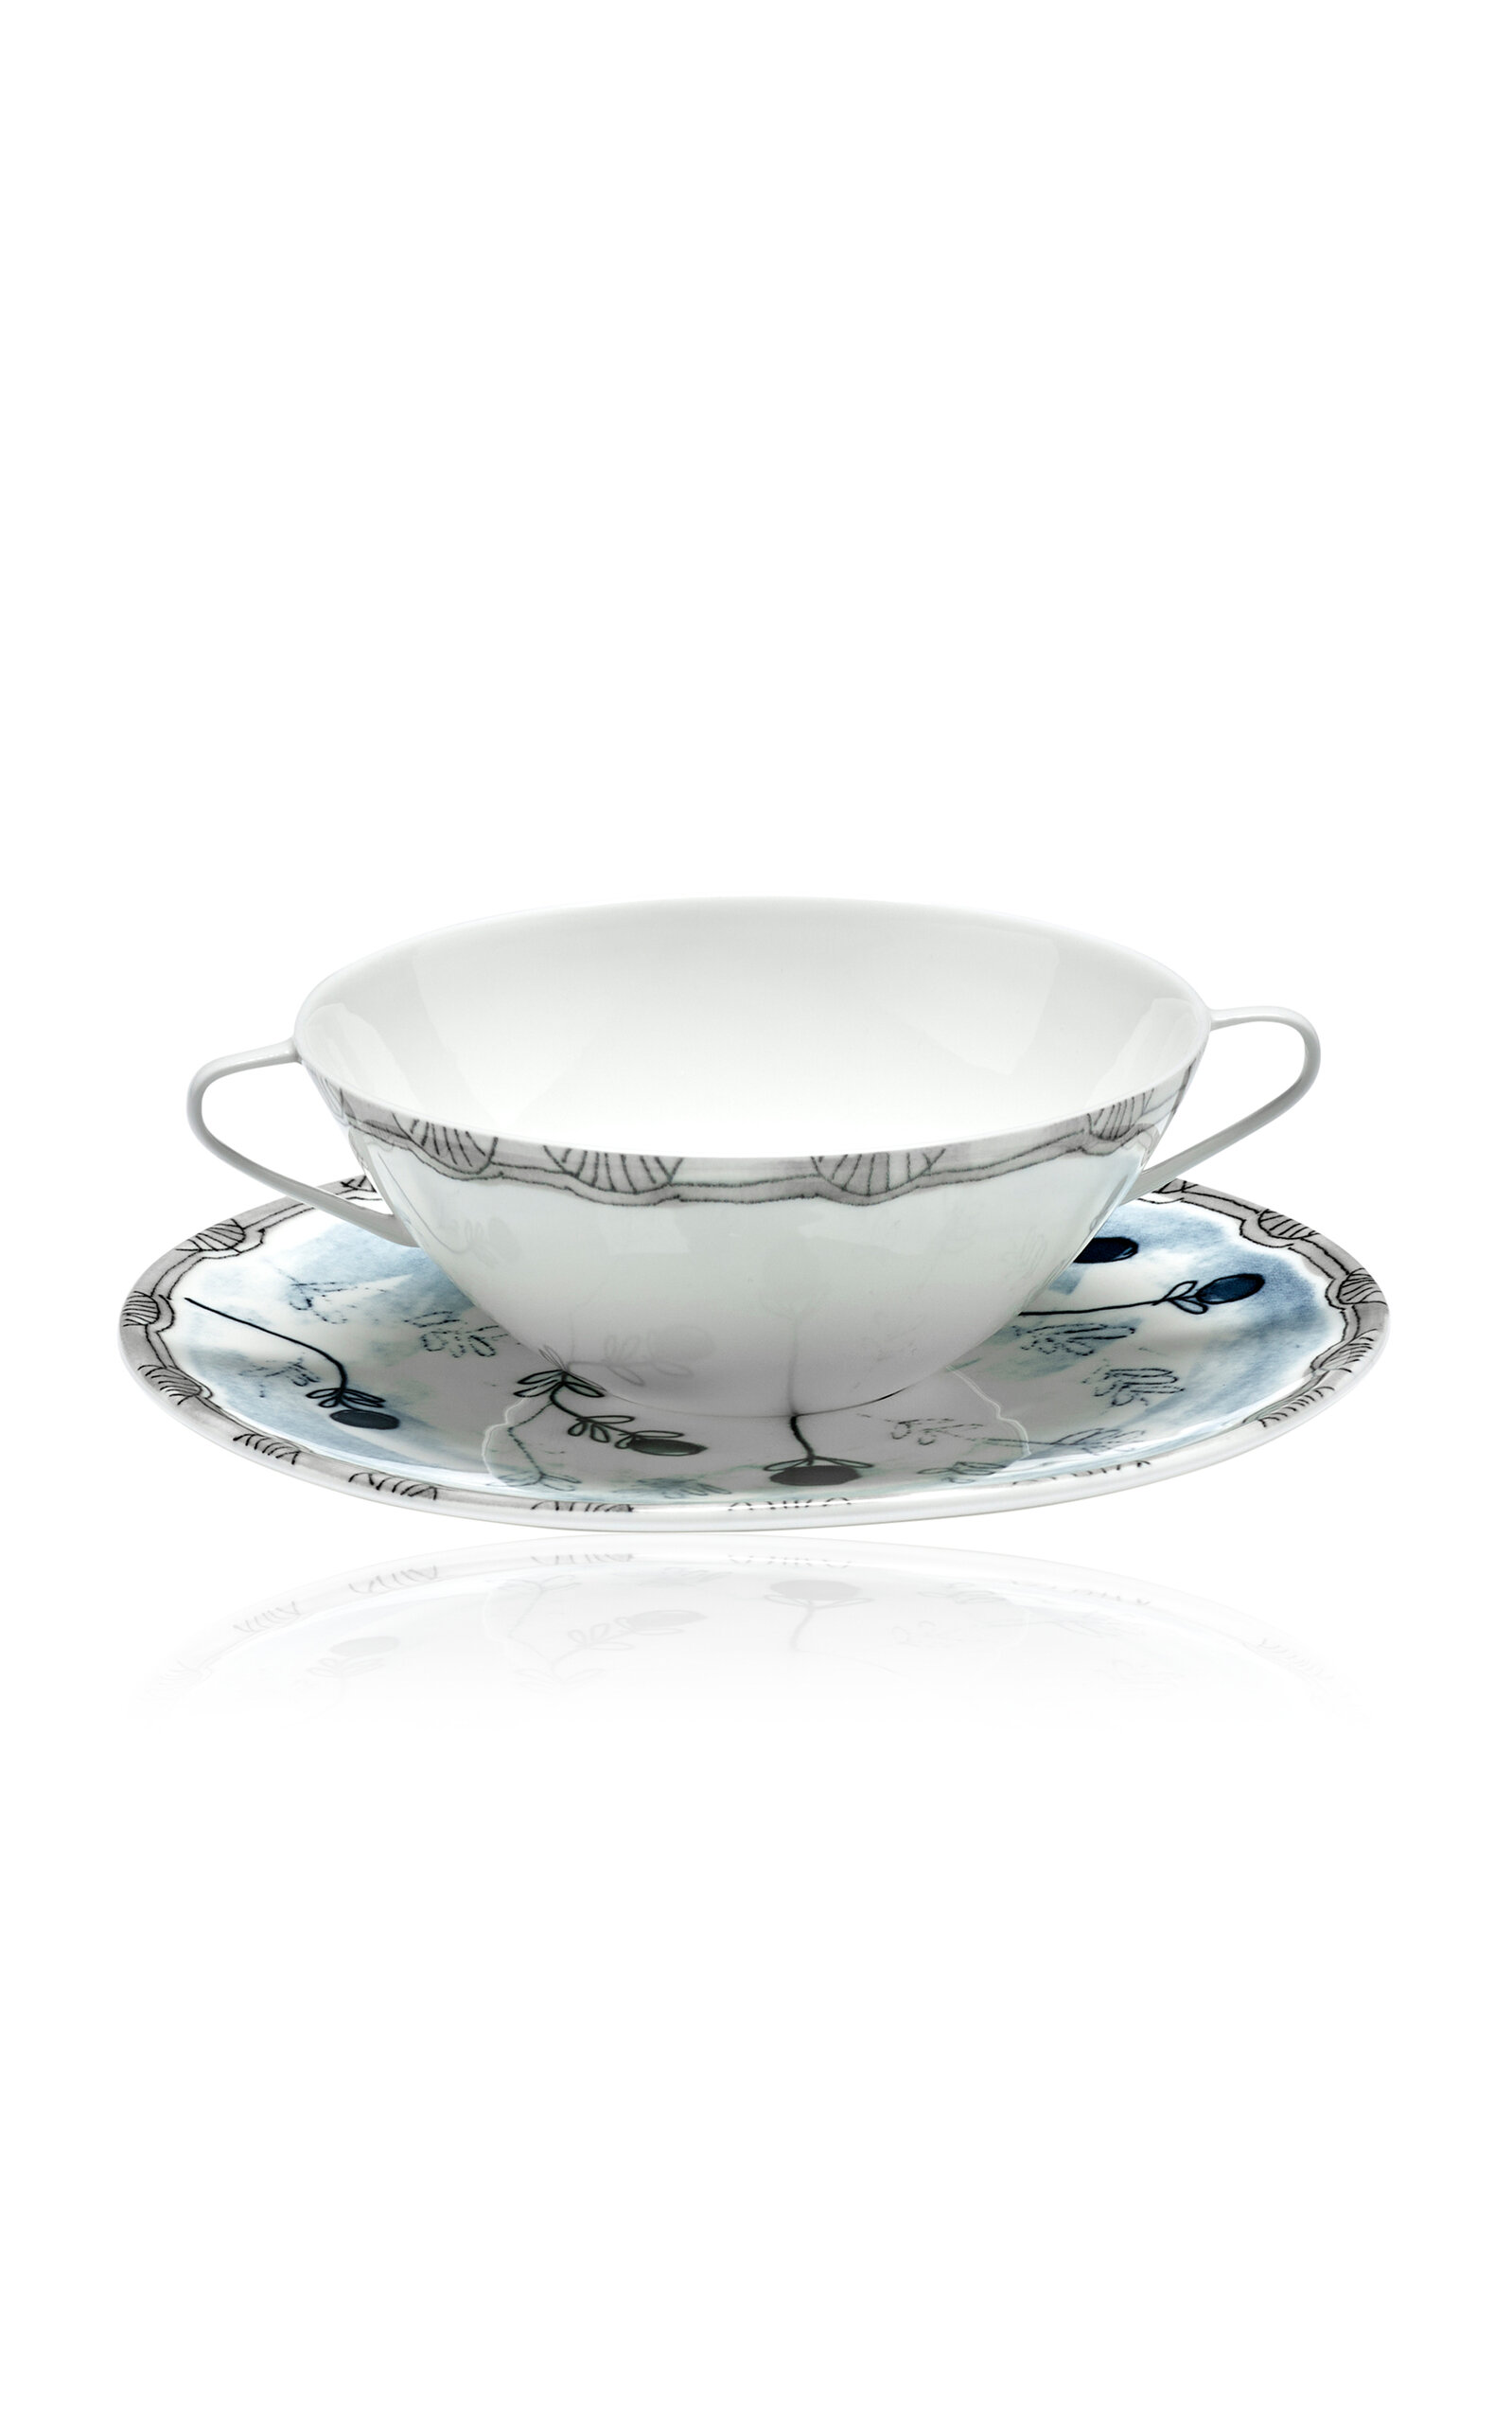 Marni For Serax Serax Marni Midnight Flowers Soup Bowl With Saucer D18cm Mirtillo Tea In White